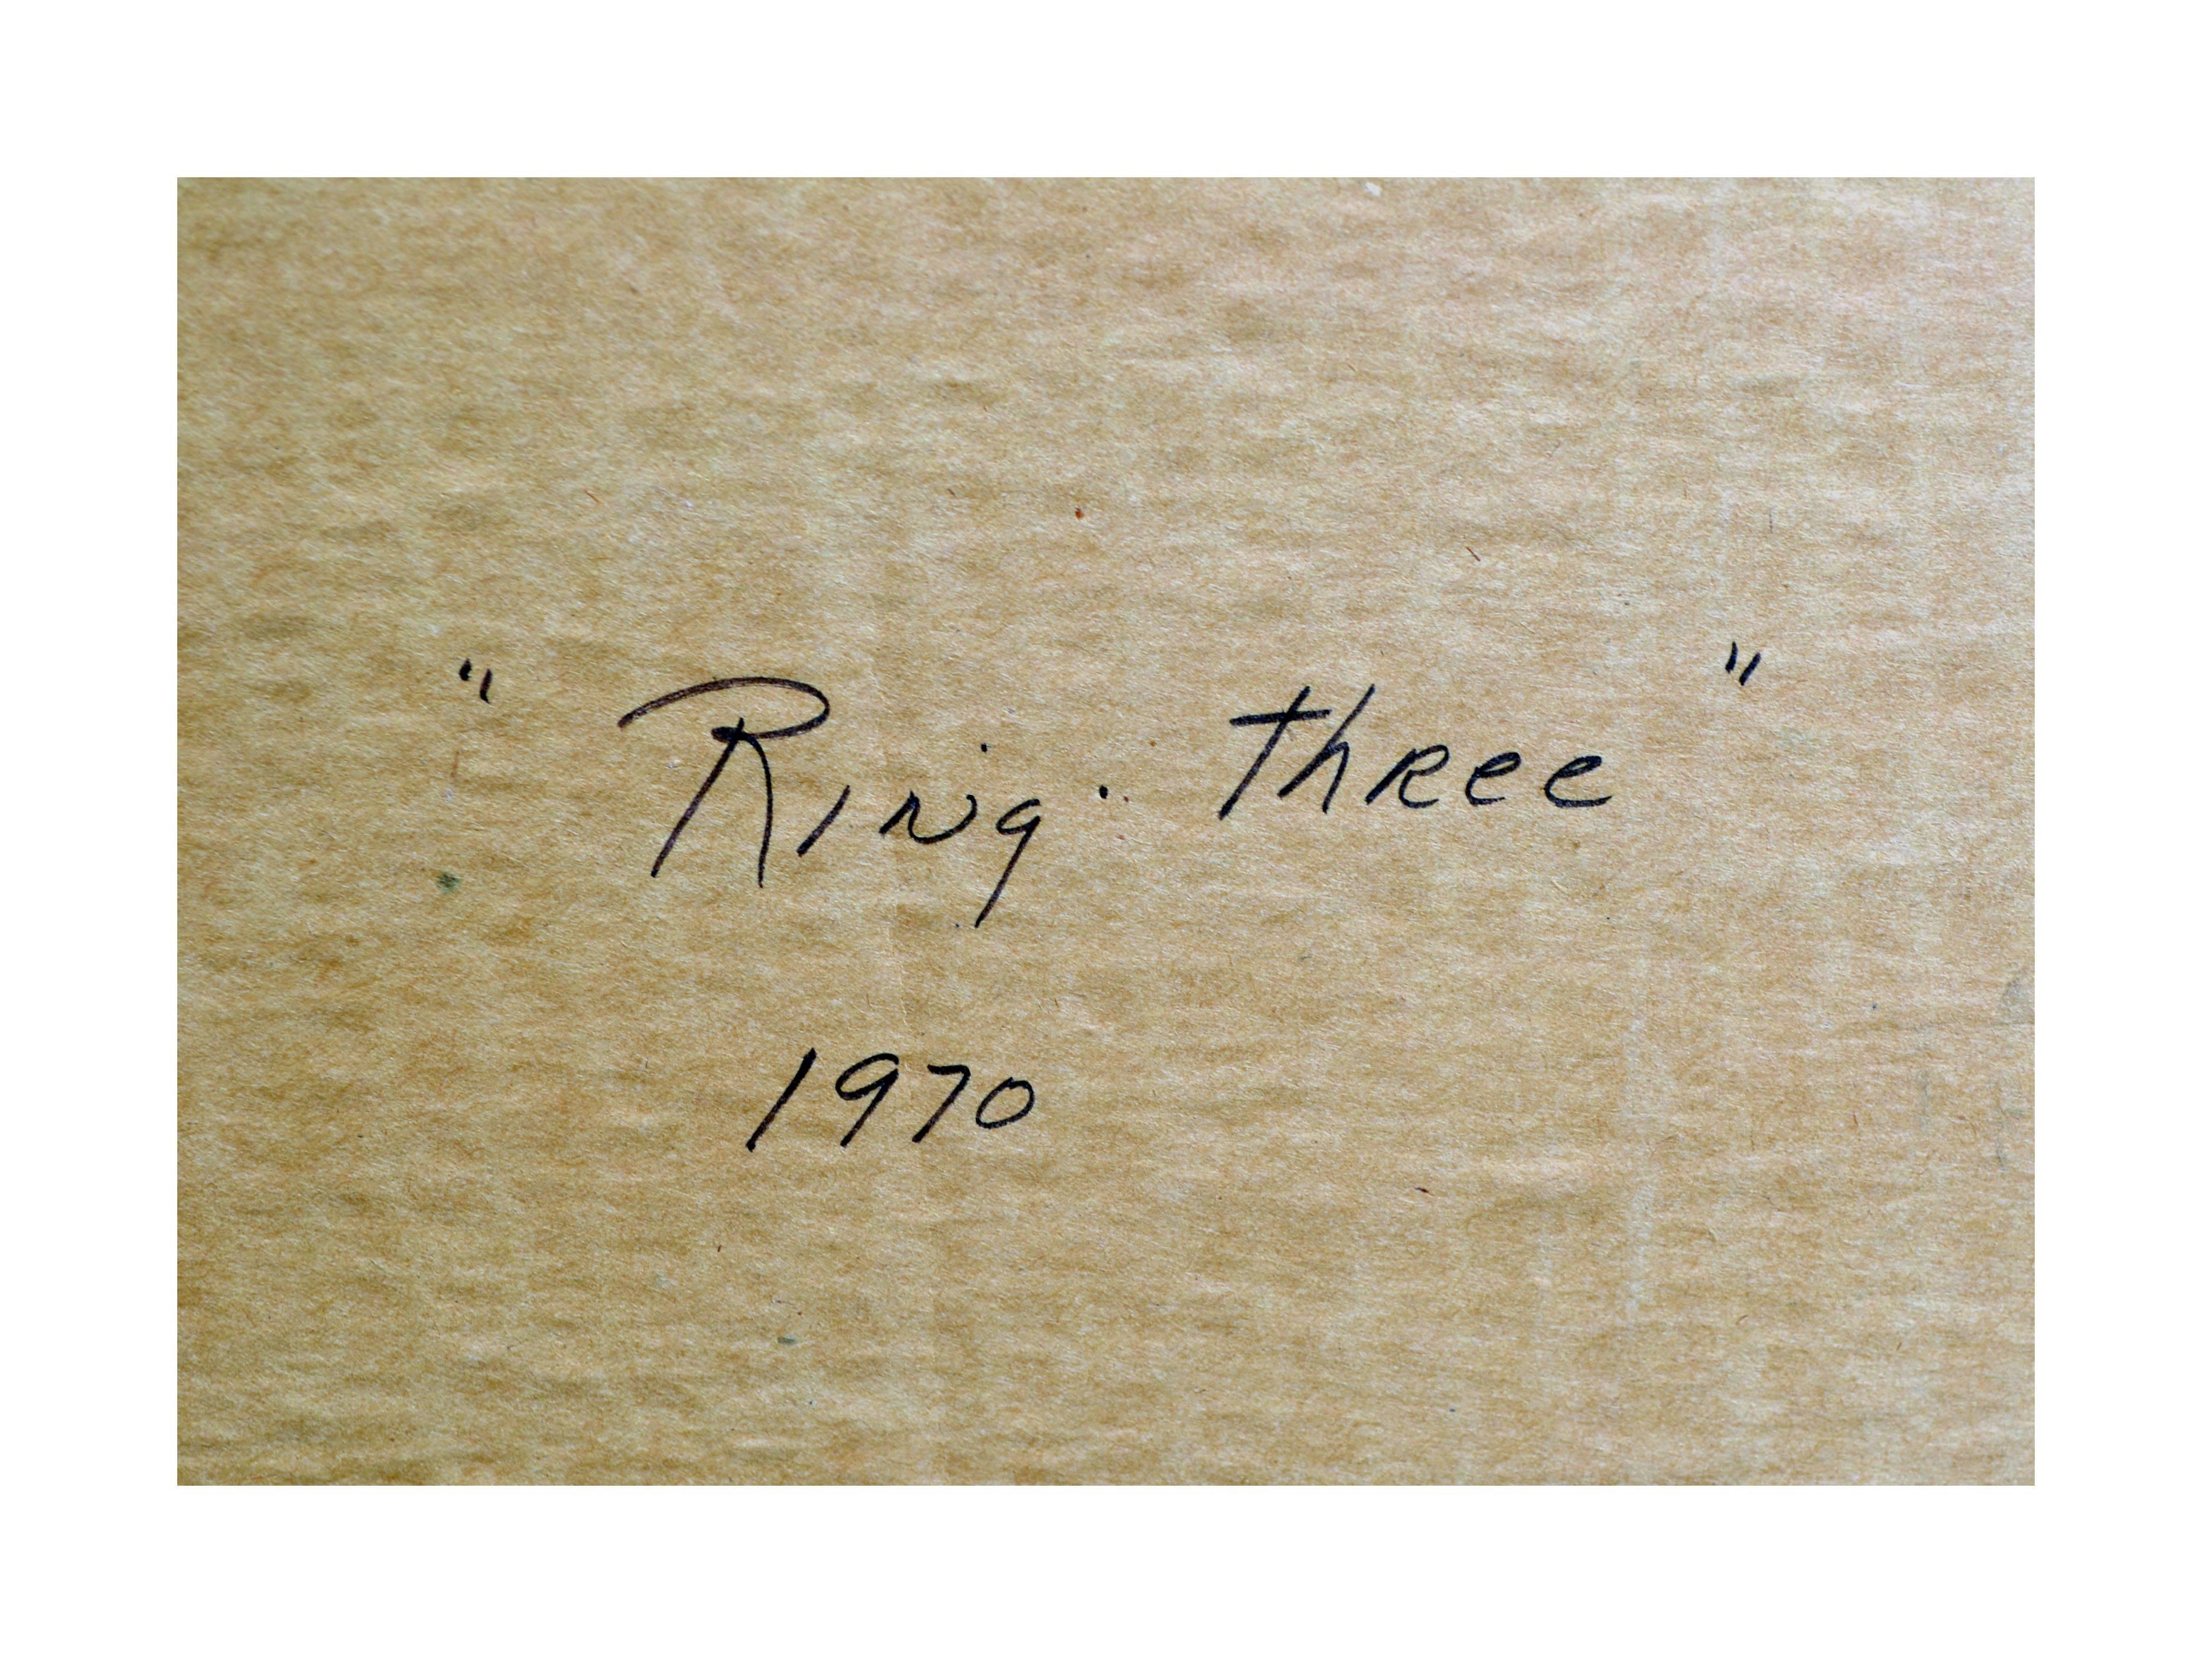 „“Ring Three“ Abstrahierter Karyadith, figurativ  (Beige), Figurative Painting, von Doris Warner